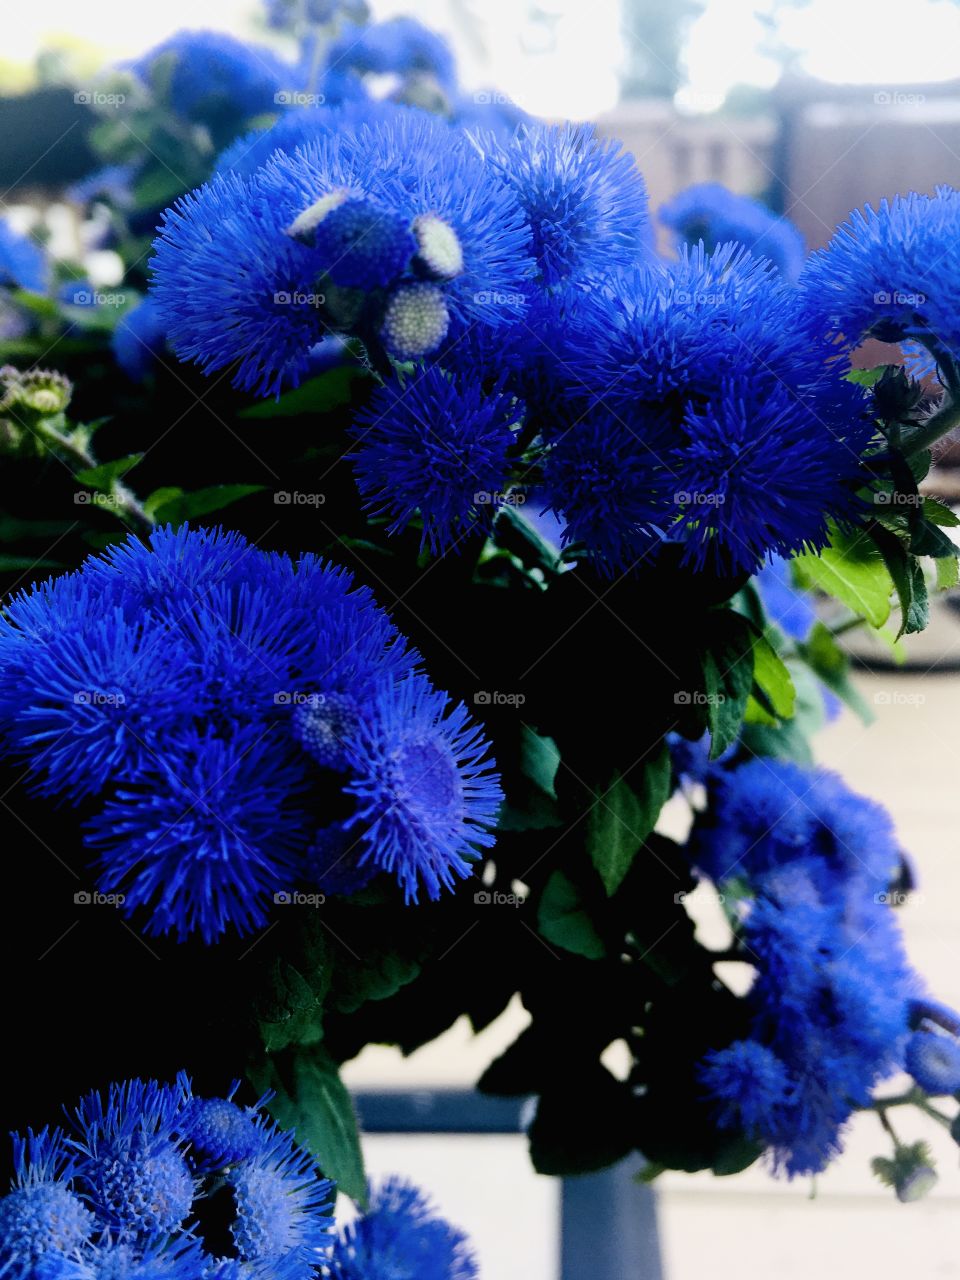 Brilliant blue flowers